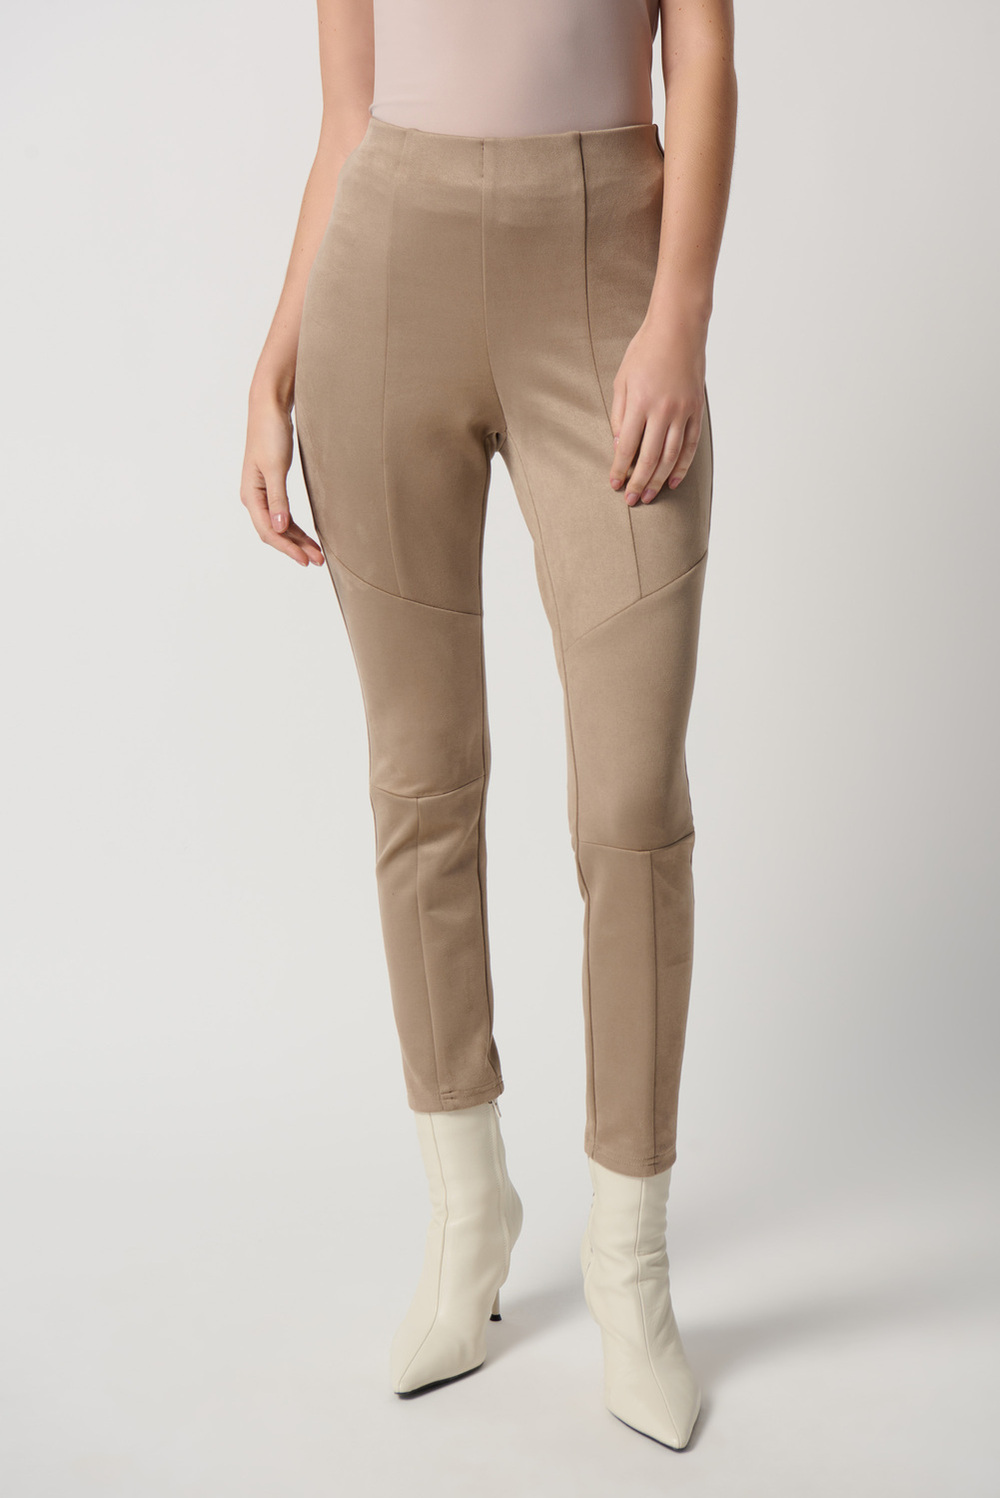 Pantalon minimaliste modèle 234234. Latte